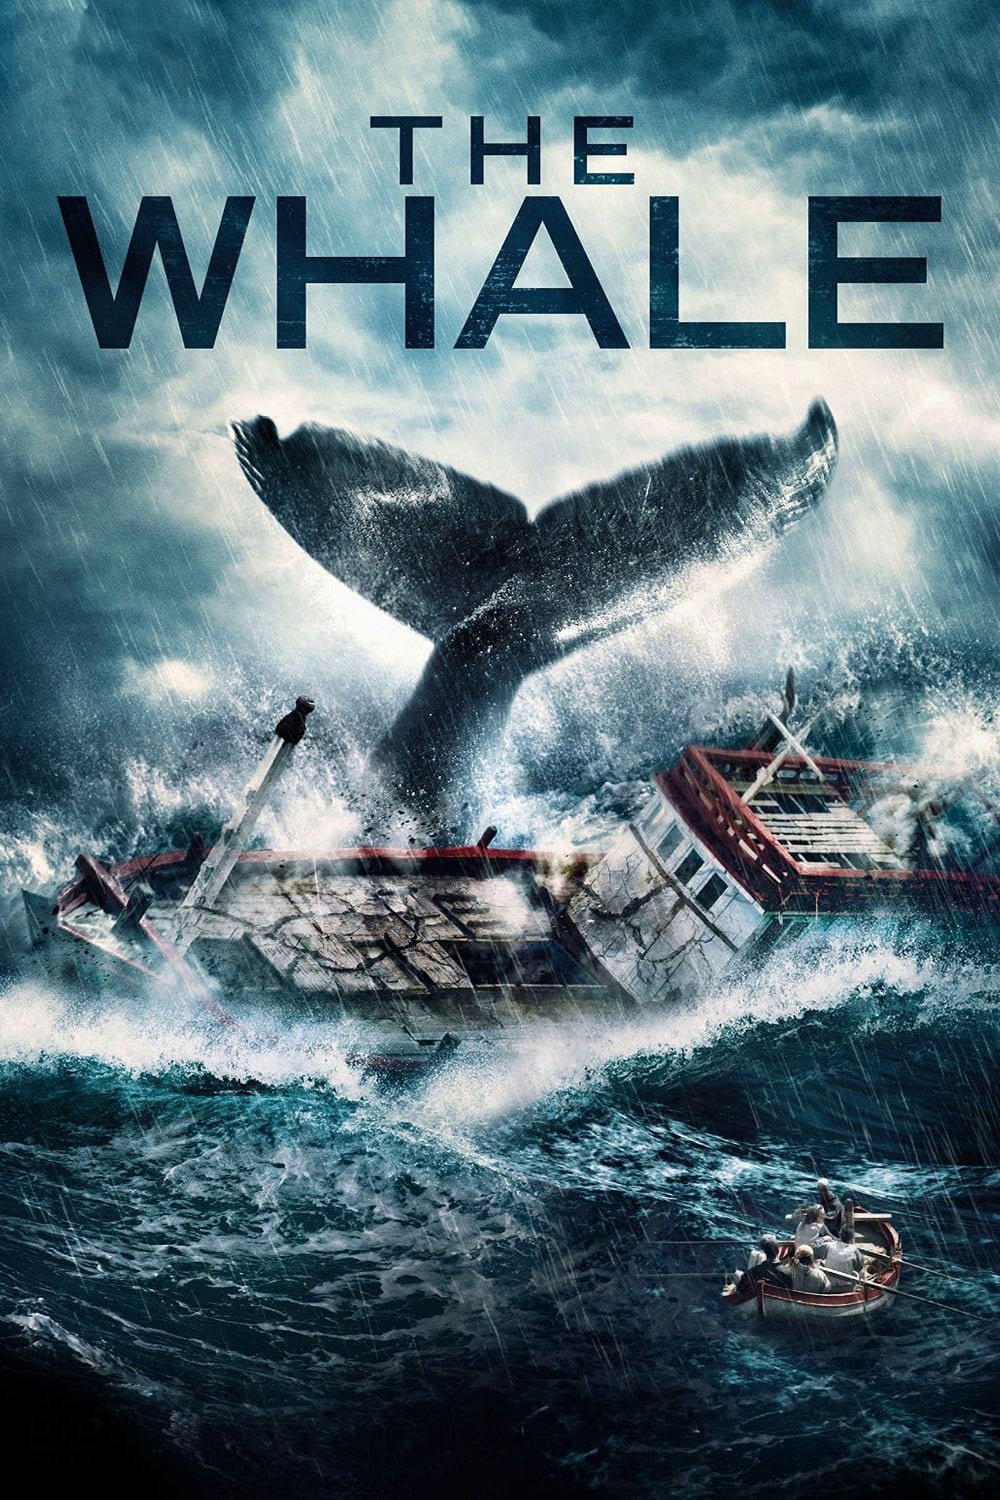 La Balena film